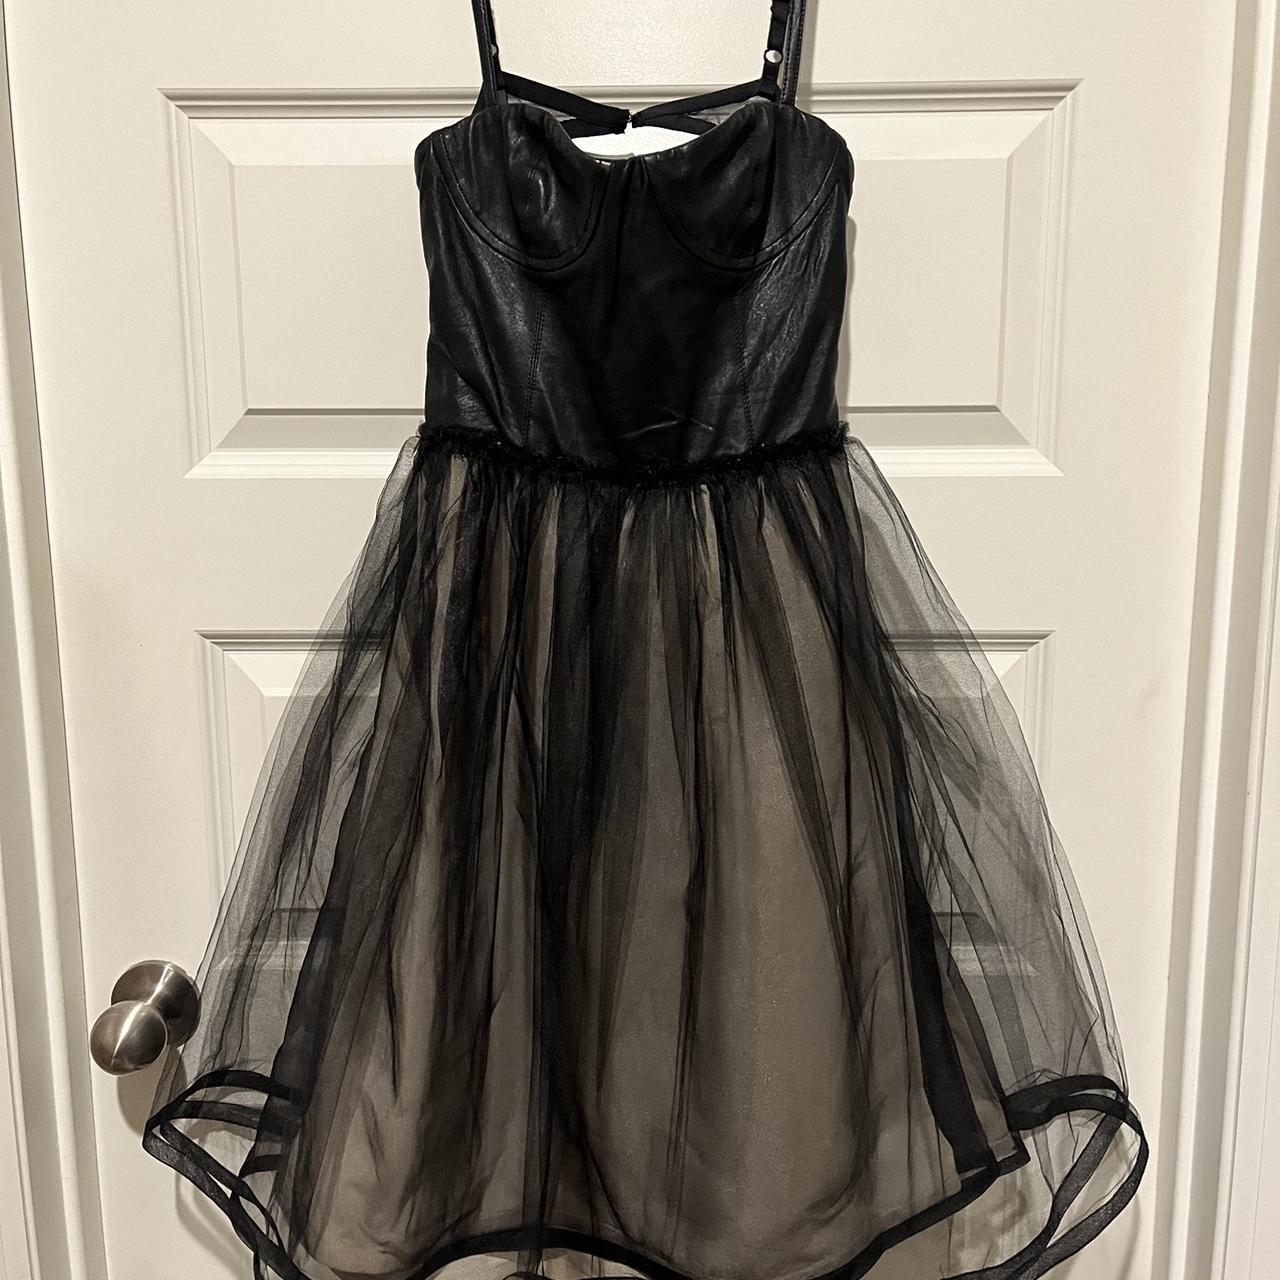 alice + olivia Women's Black and Tan Dress